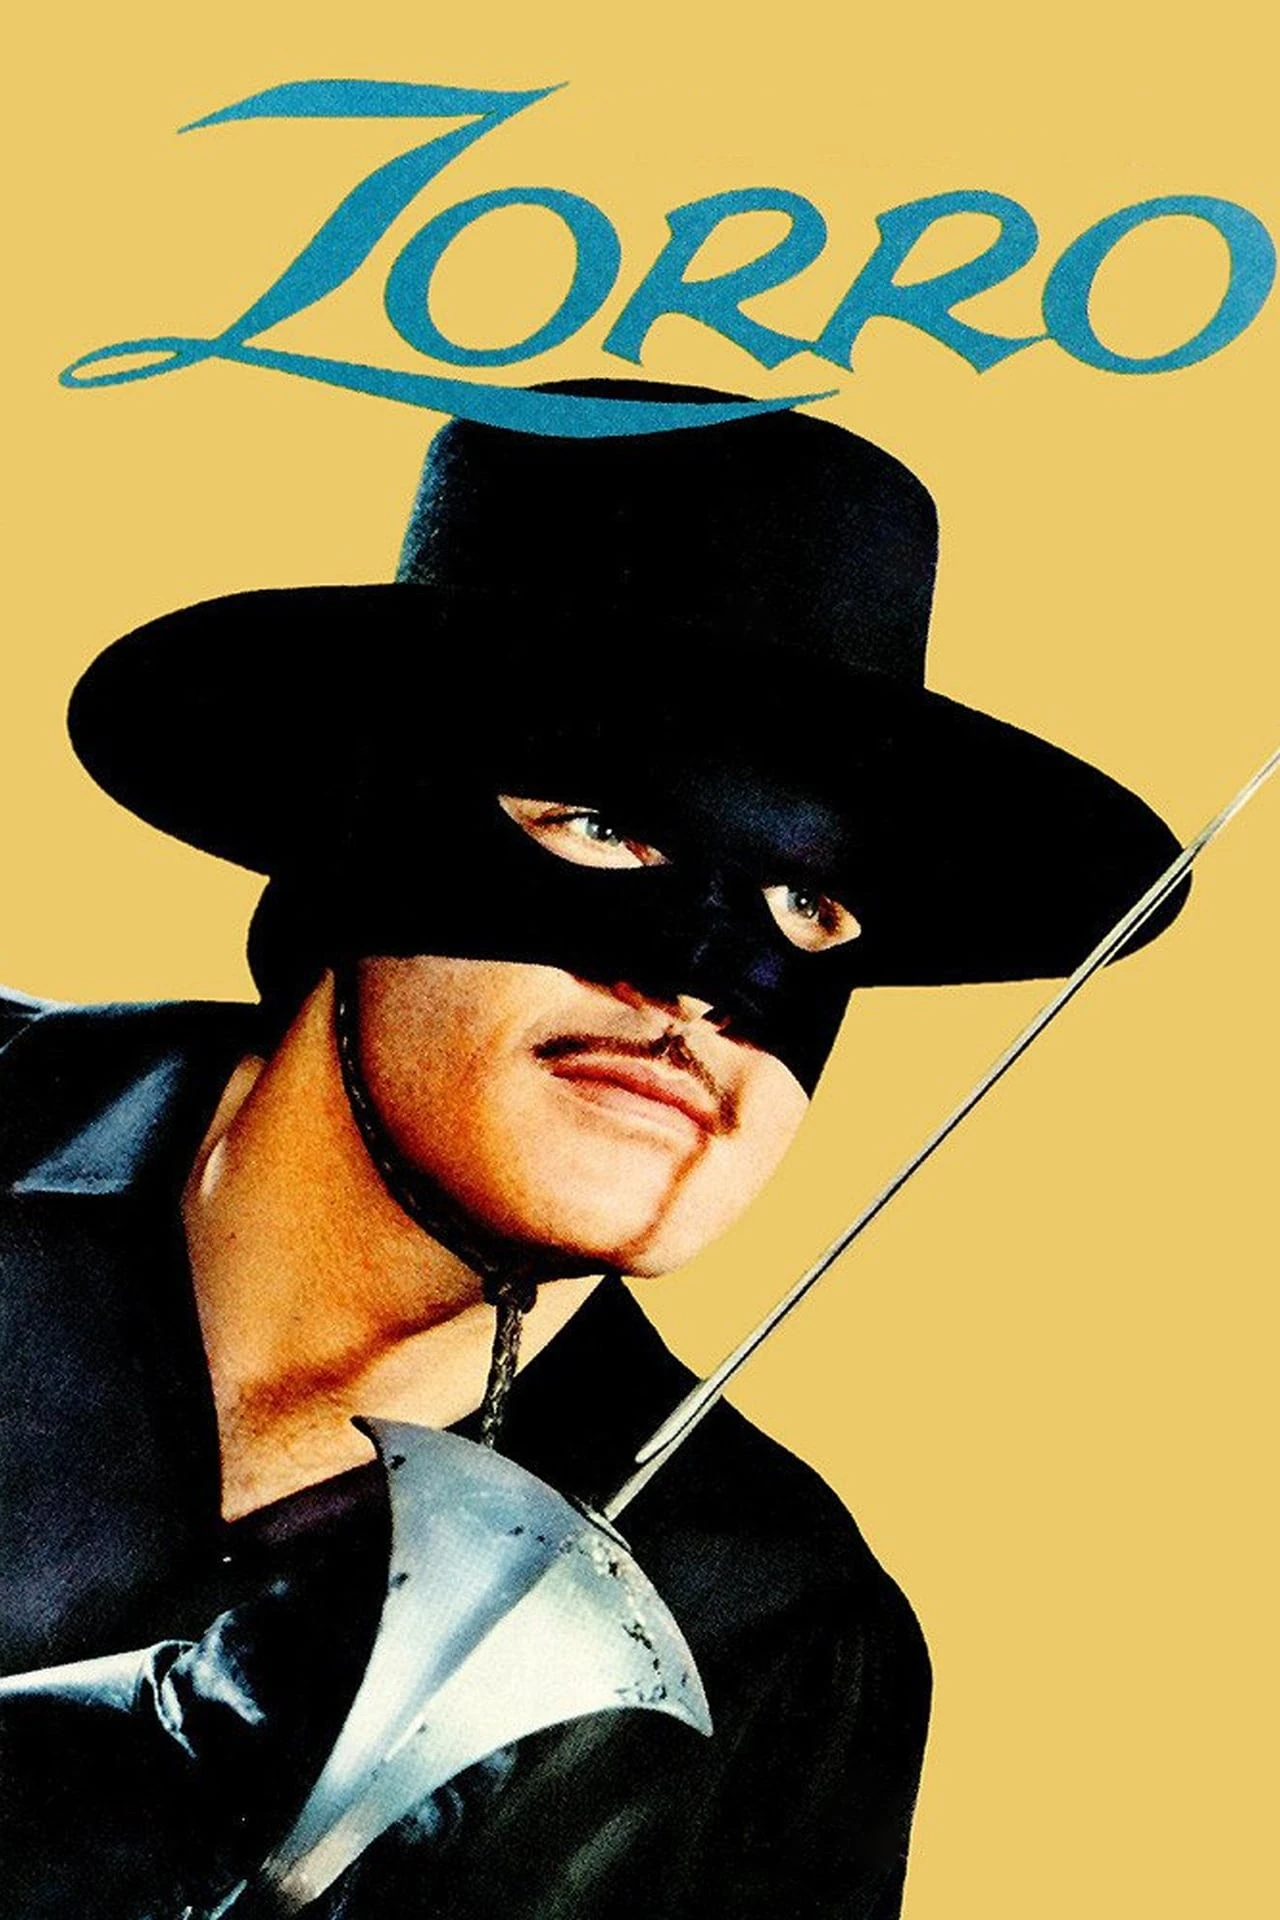 Zorro dressage music freestyle dressage